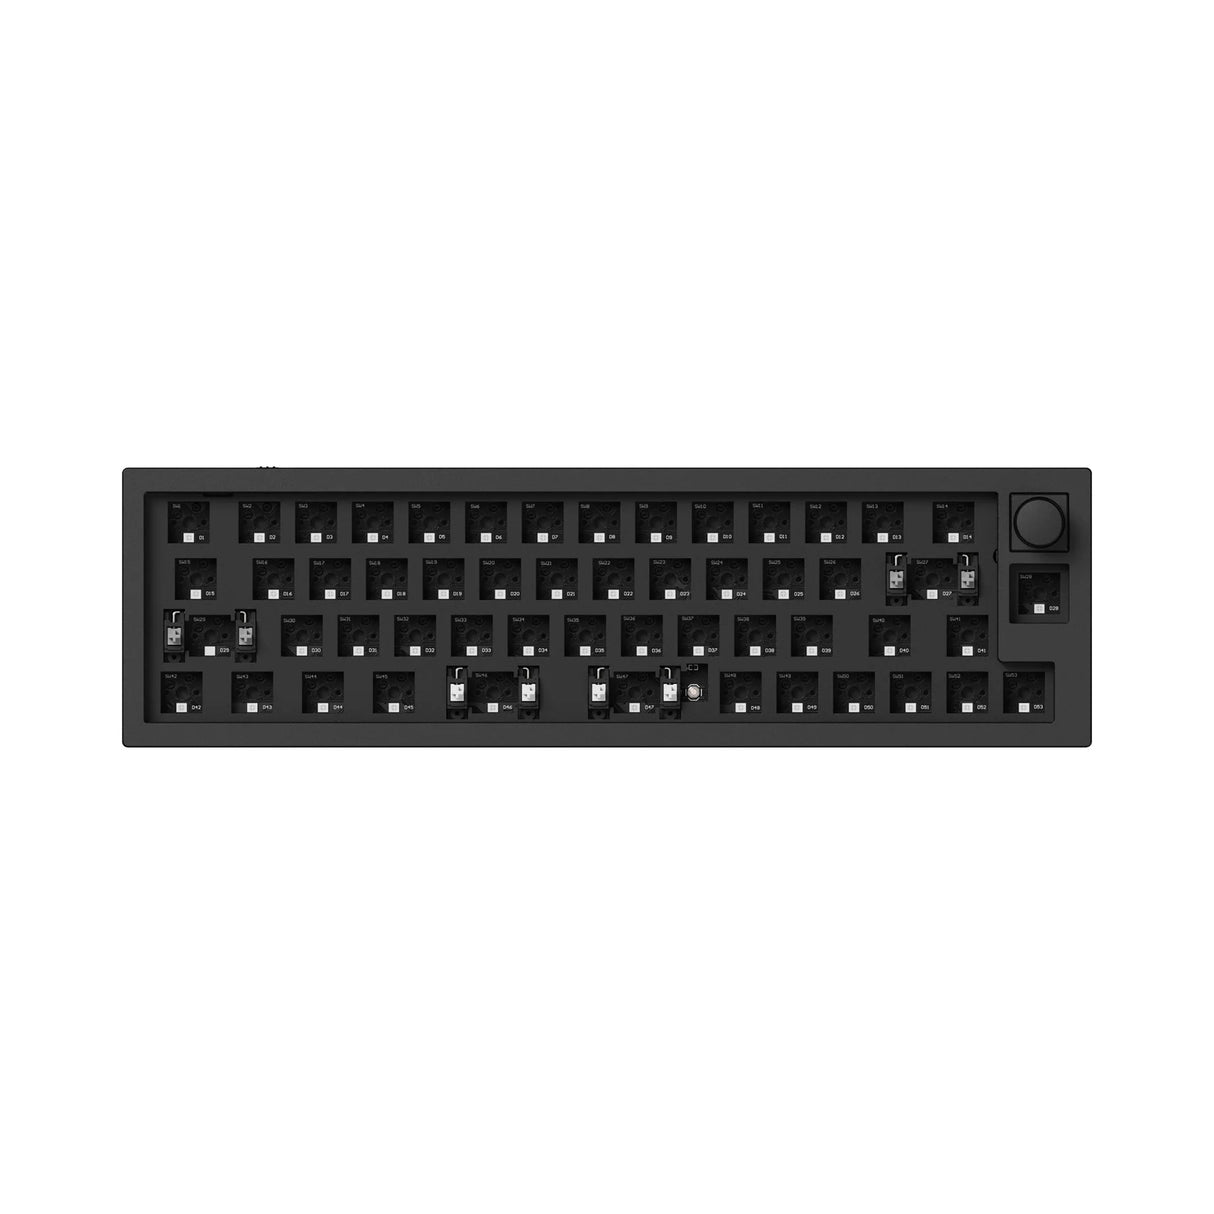 Keychron Q9 Plus QMK/VIA custom mechanical keyboard 40% layout barebone knob version